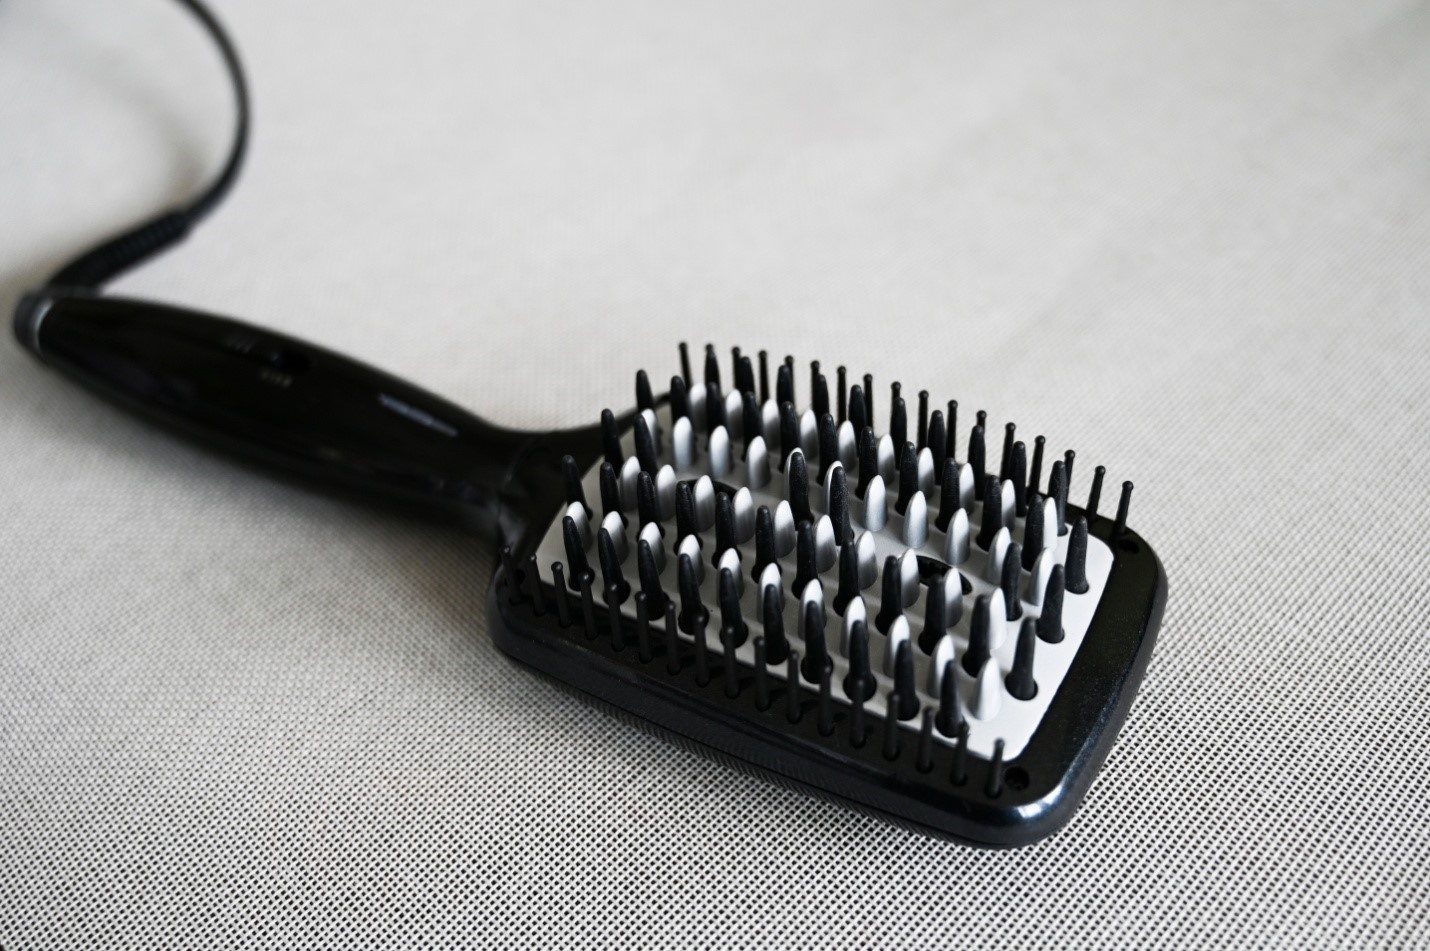 Hair Straightening Brush for Busy-Girls-On-the-Go 2